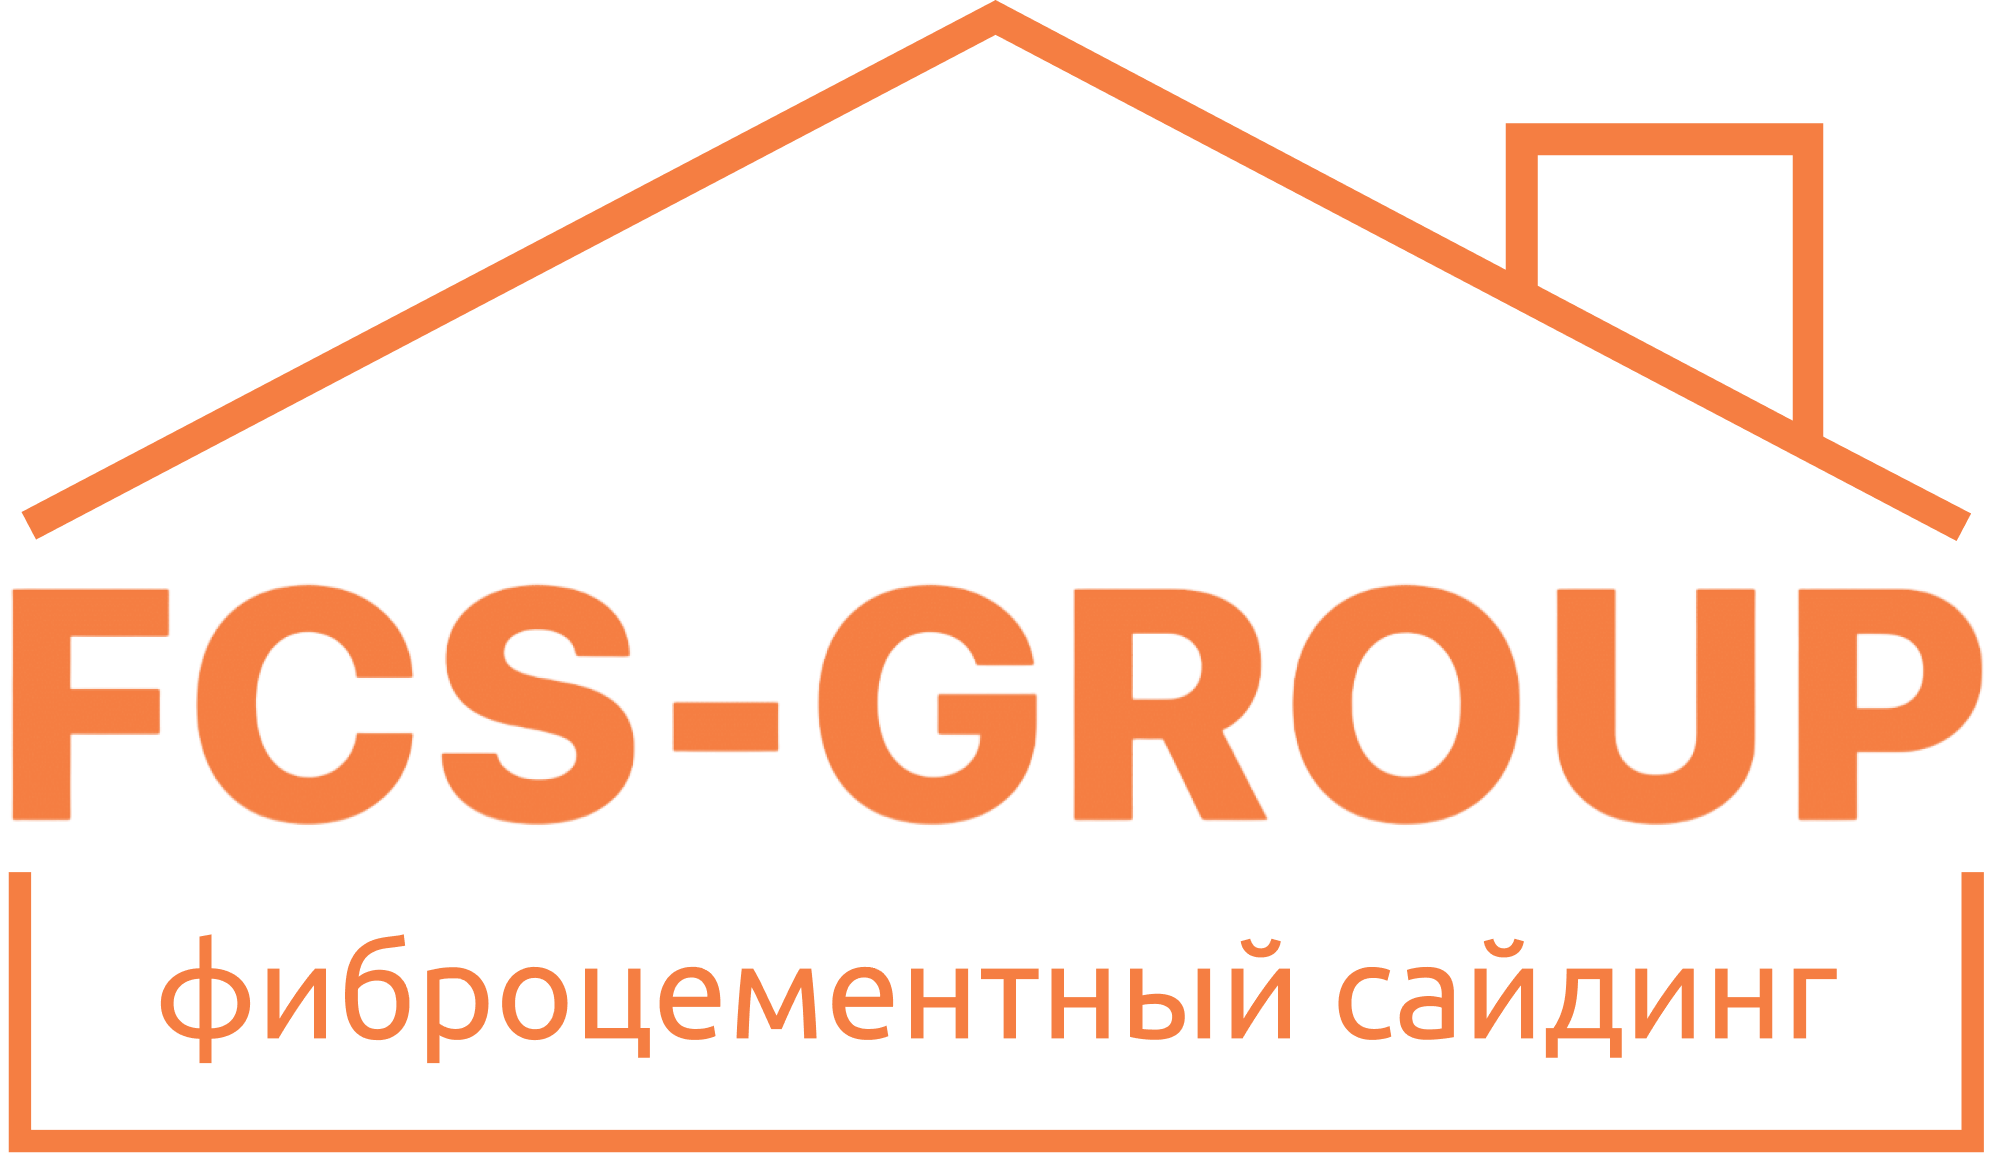 FCS-GROUP Image